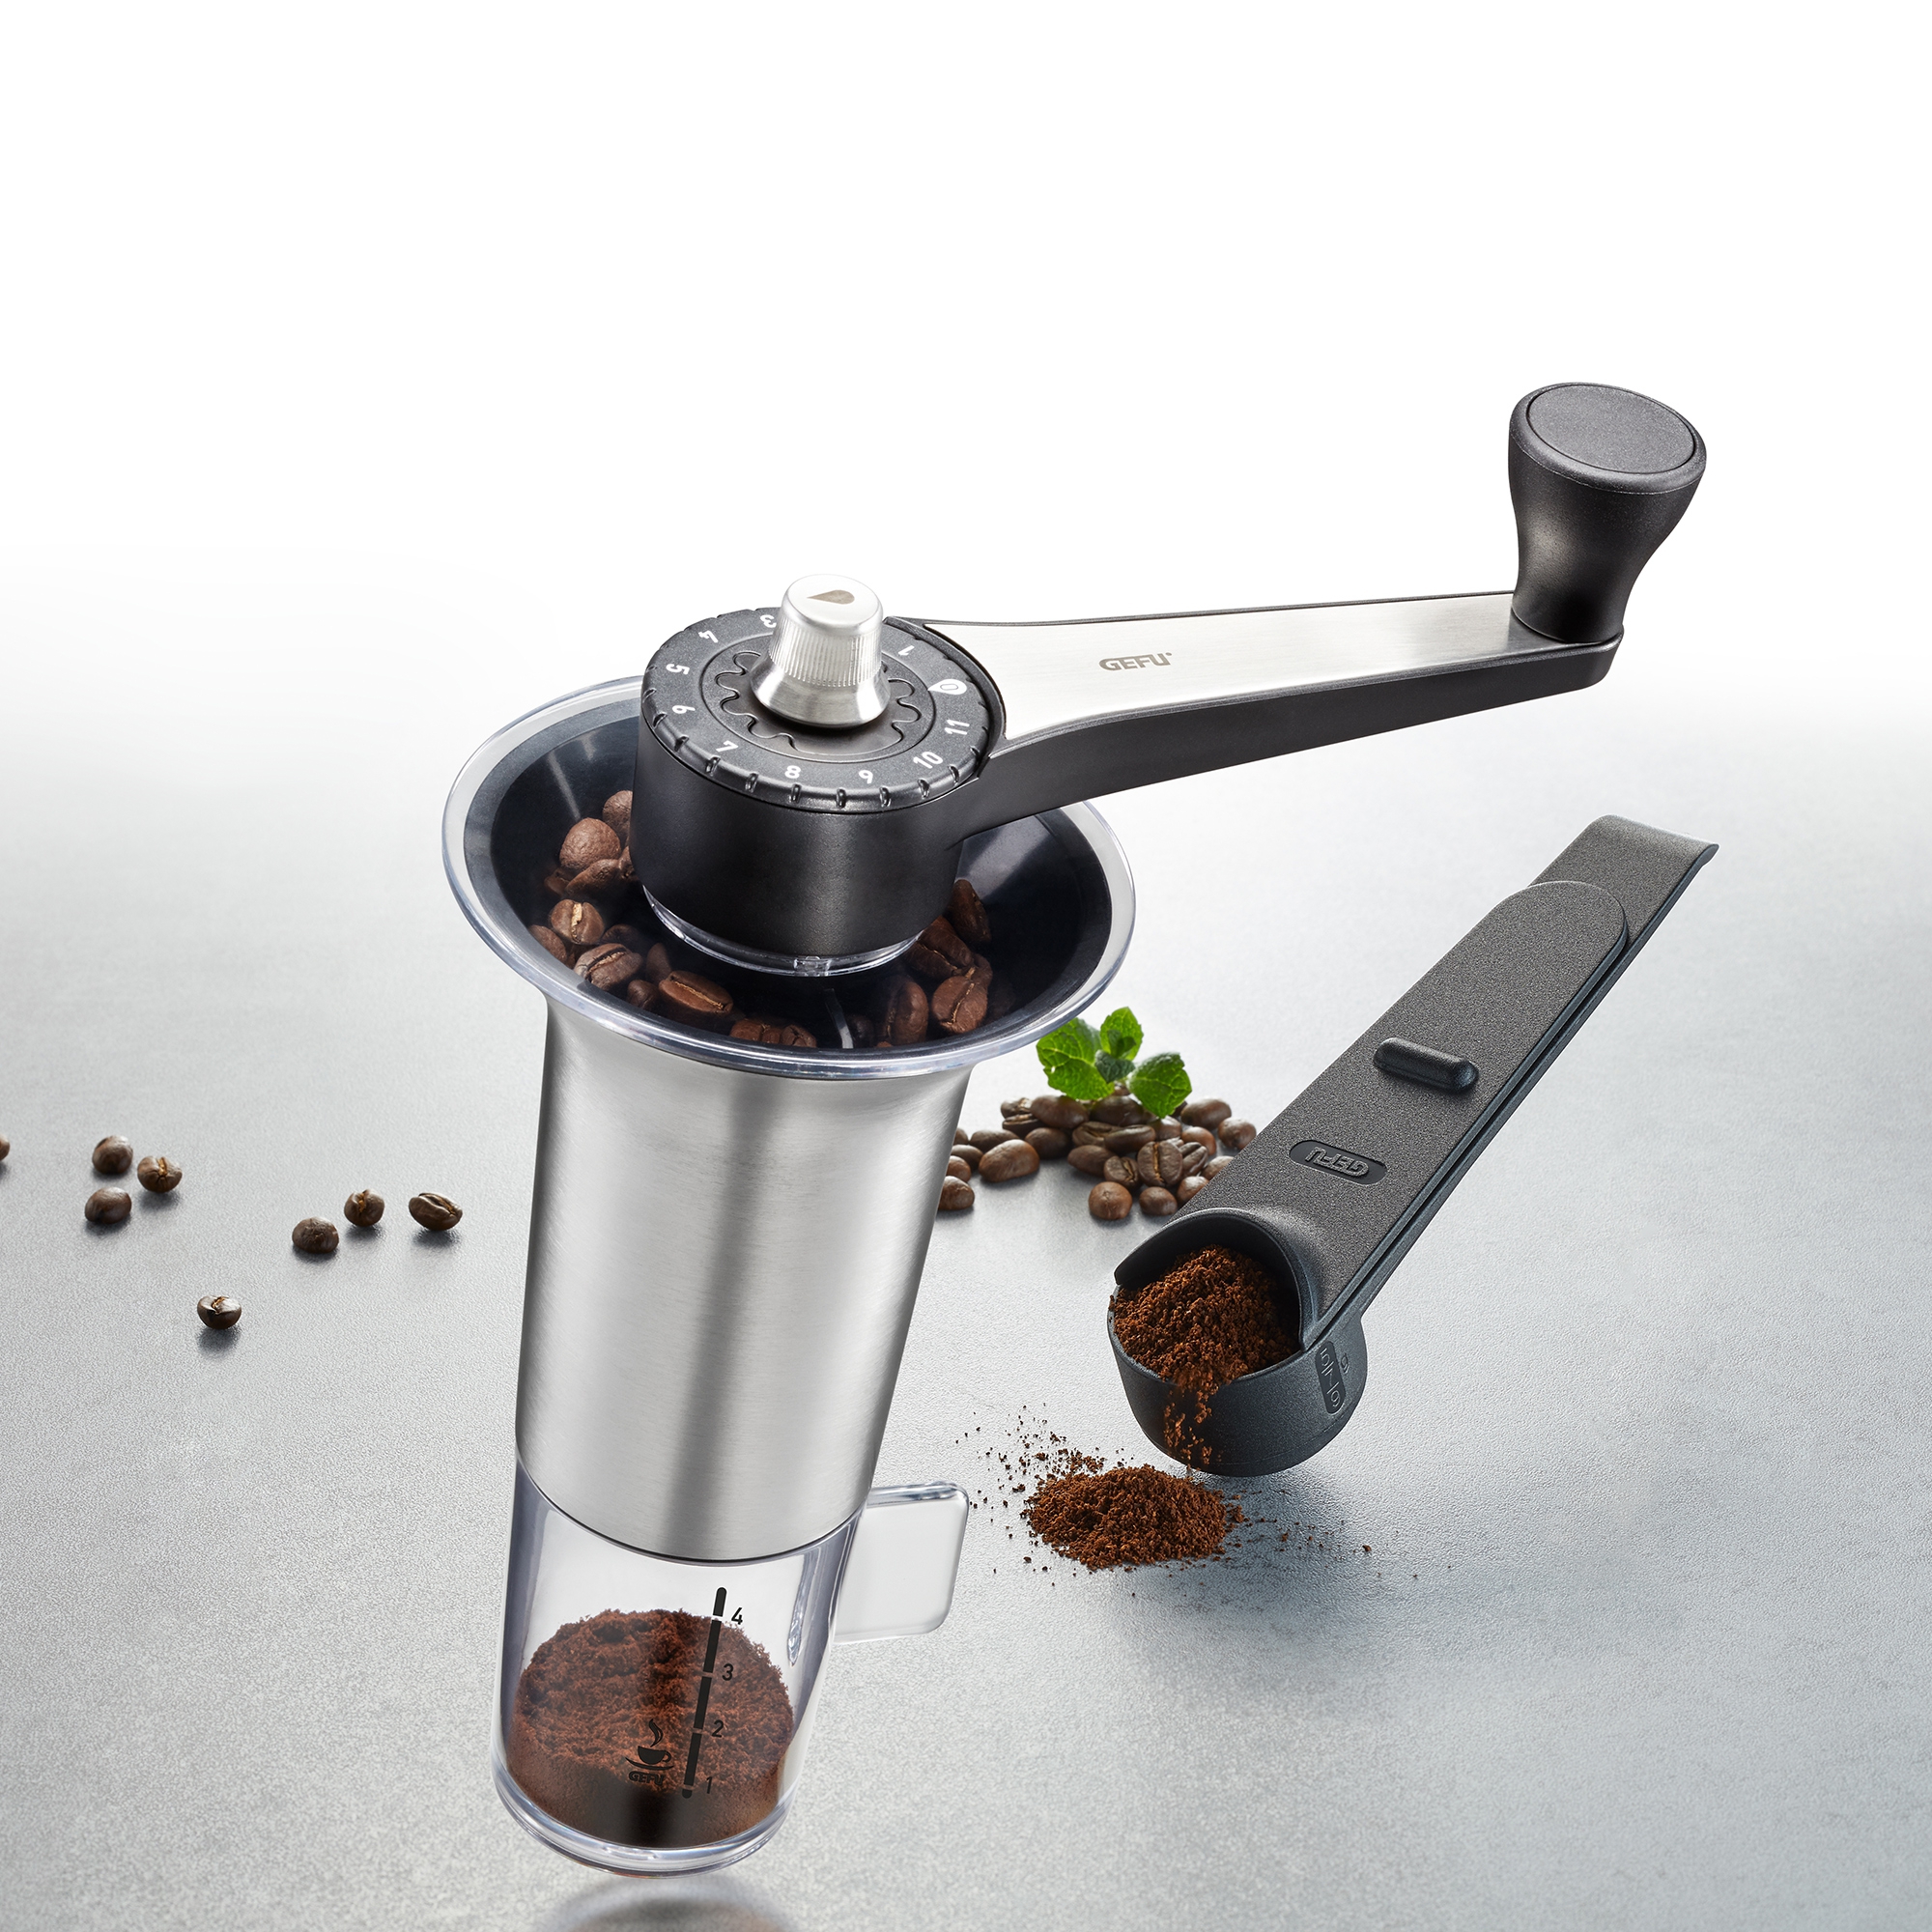 Gefu - coffee grinder Lorenz + coffee measure Moreno